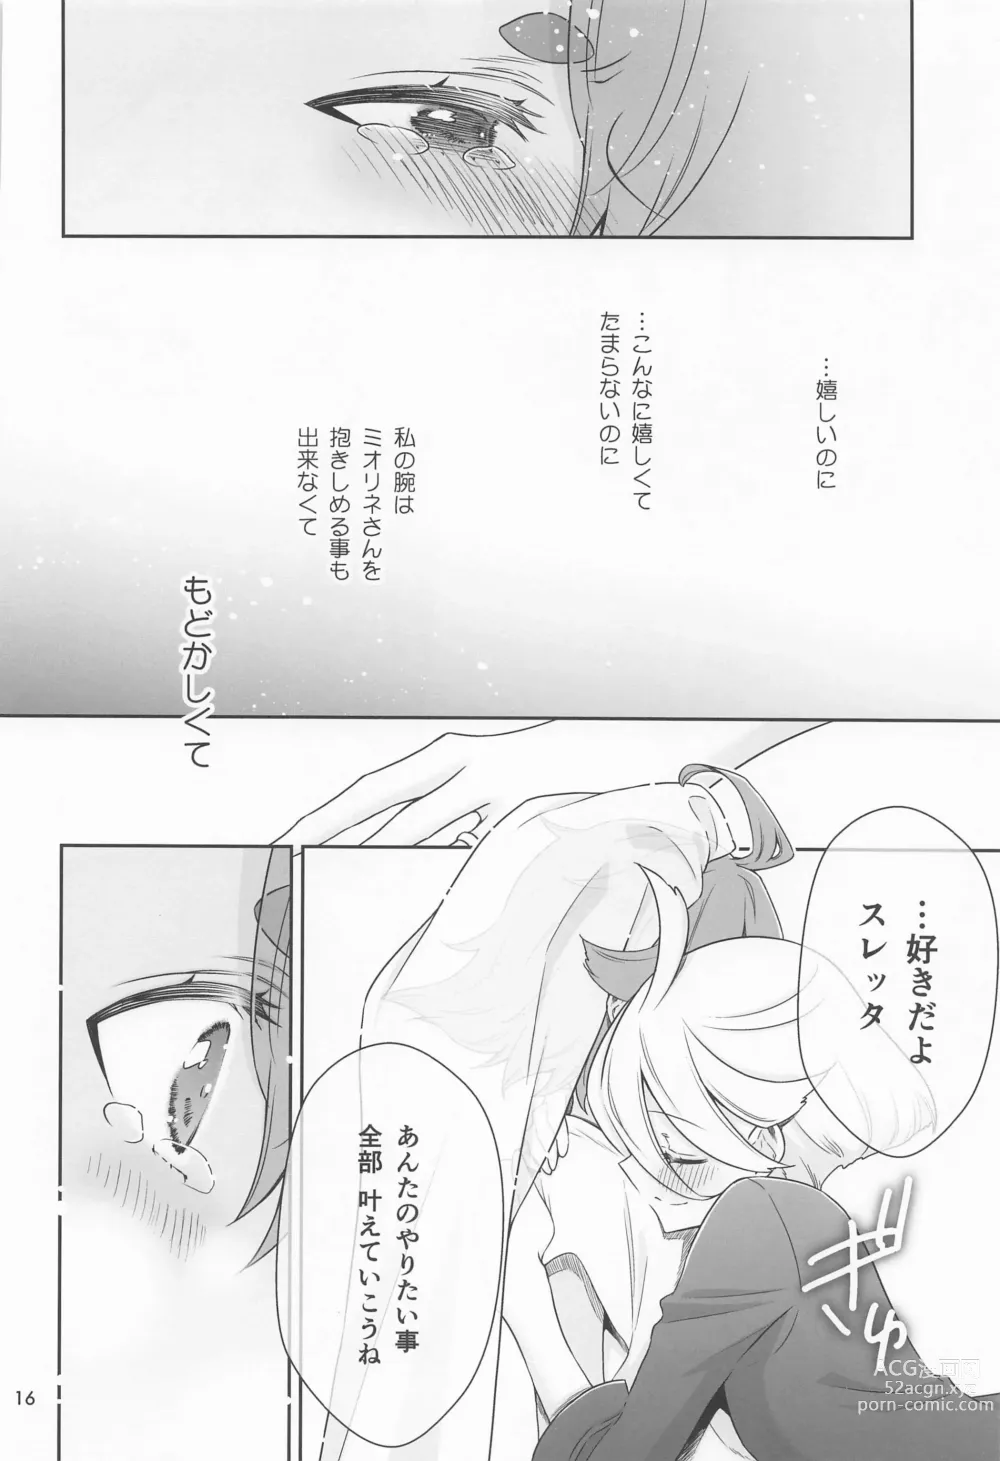 Page 15 of doujinshi Shukufuku no Hi